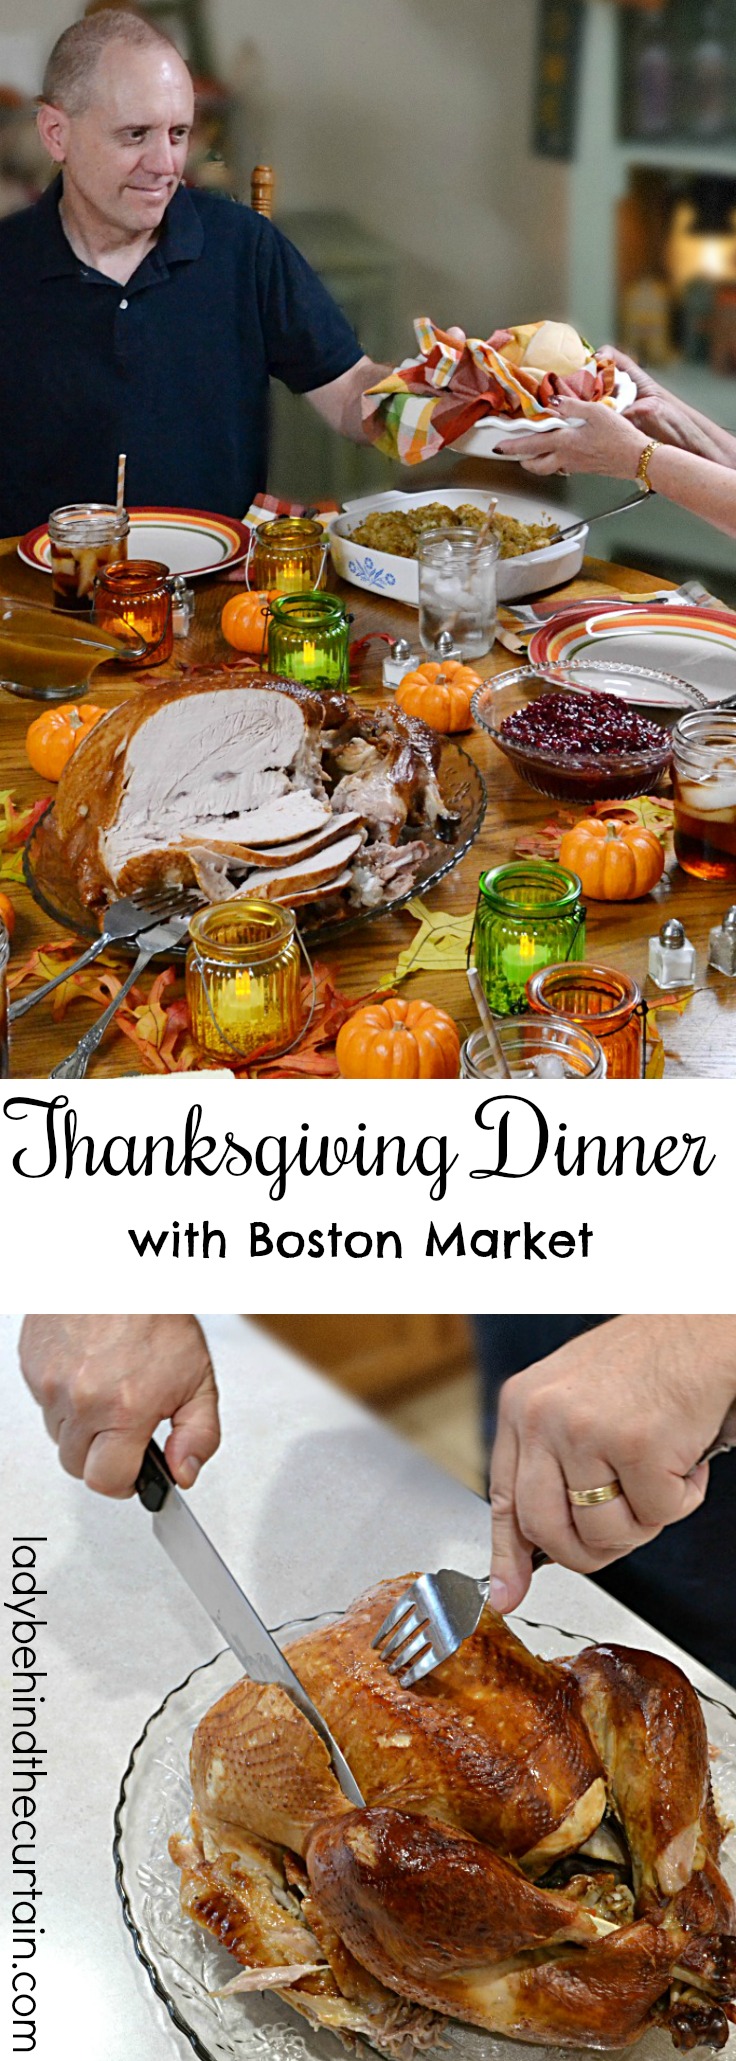 Thanksgiving Dinner with Boston Market